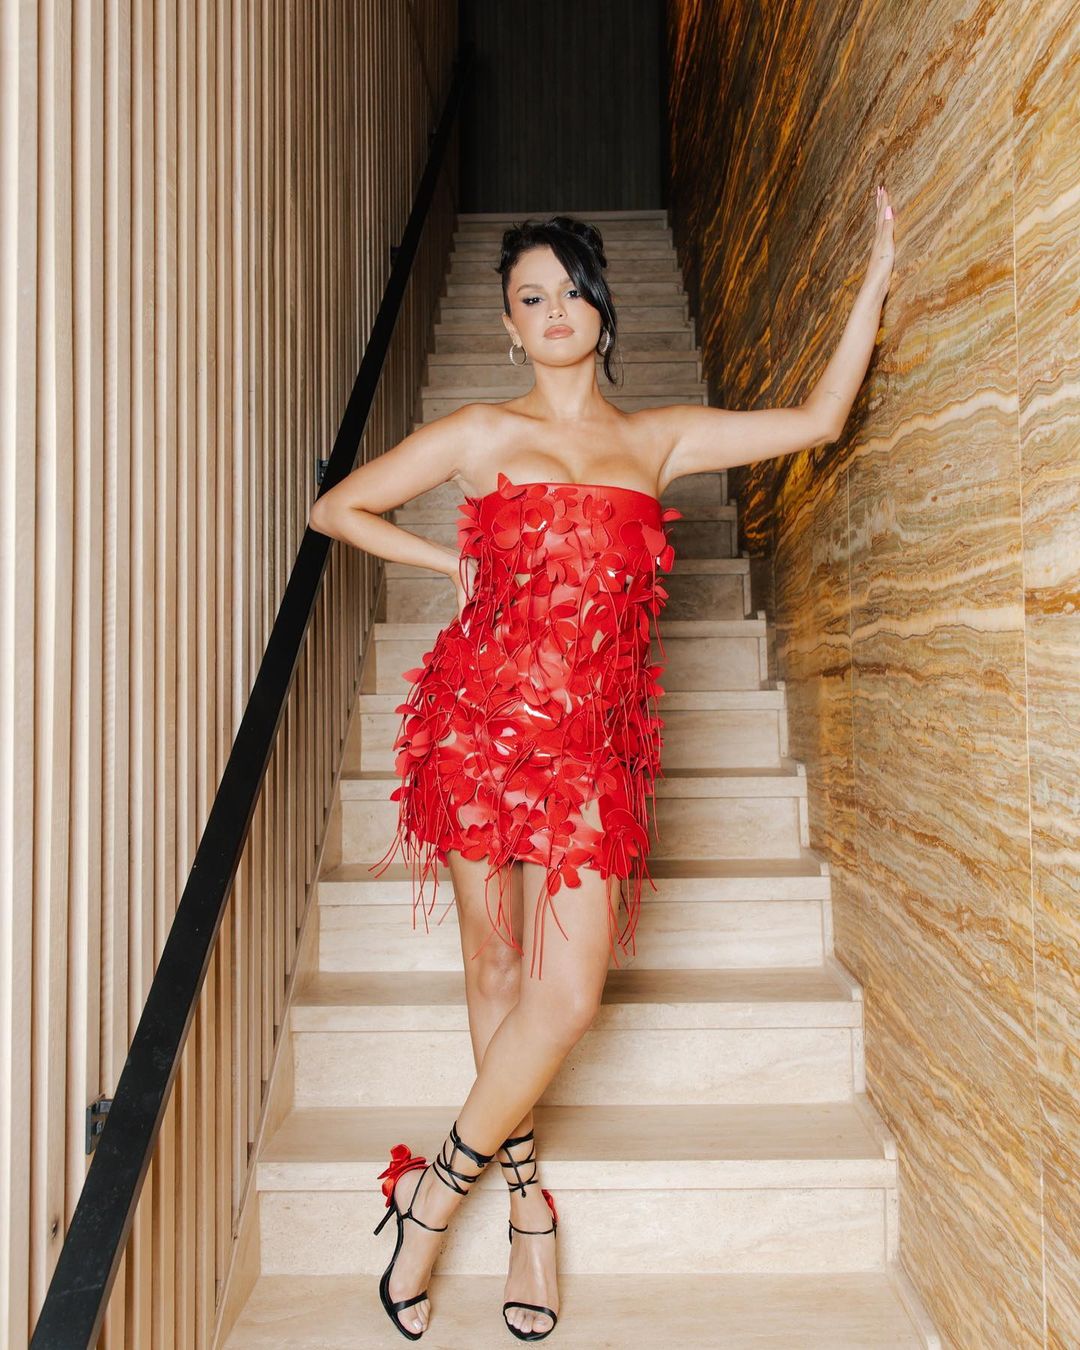 Selena Gomez's AMAs Dress Is Very Sexy | HuffPost Life